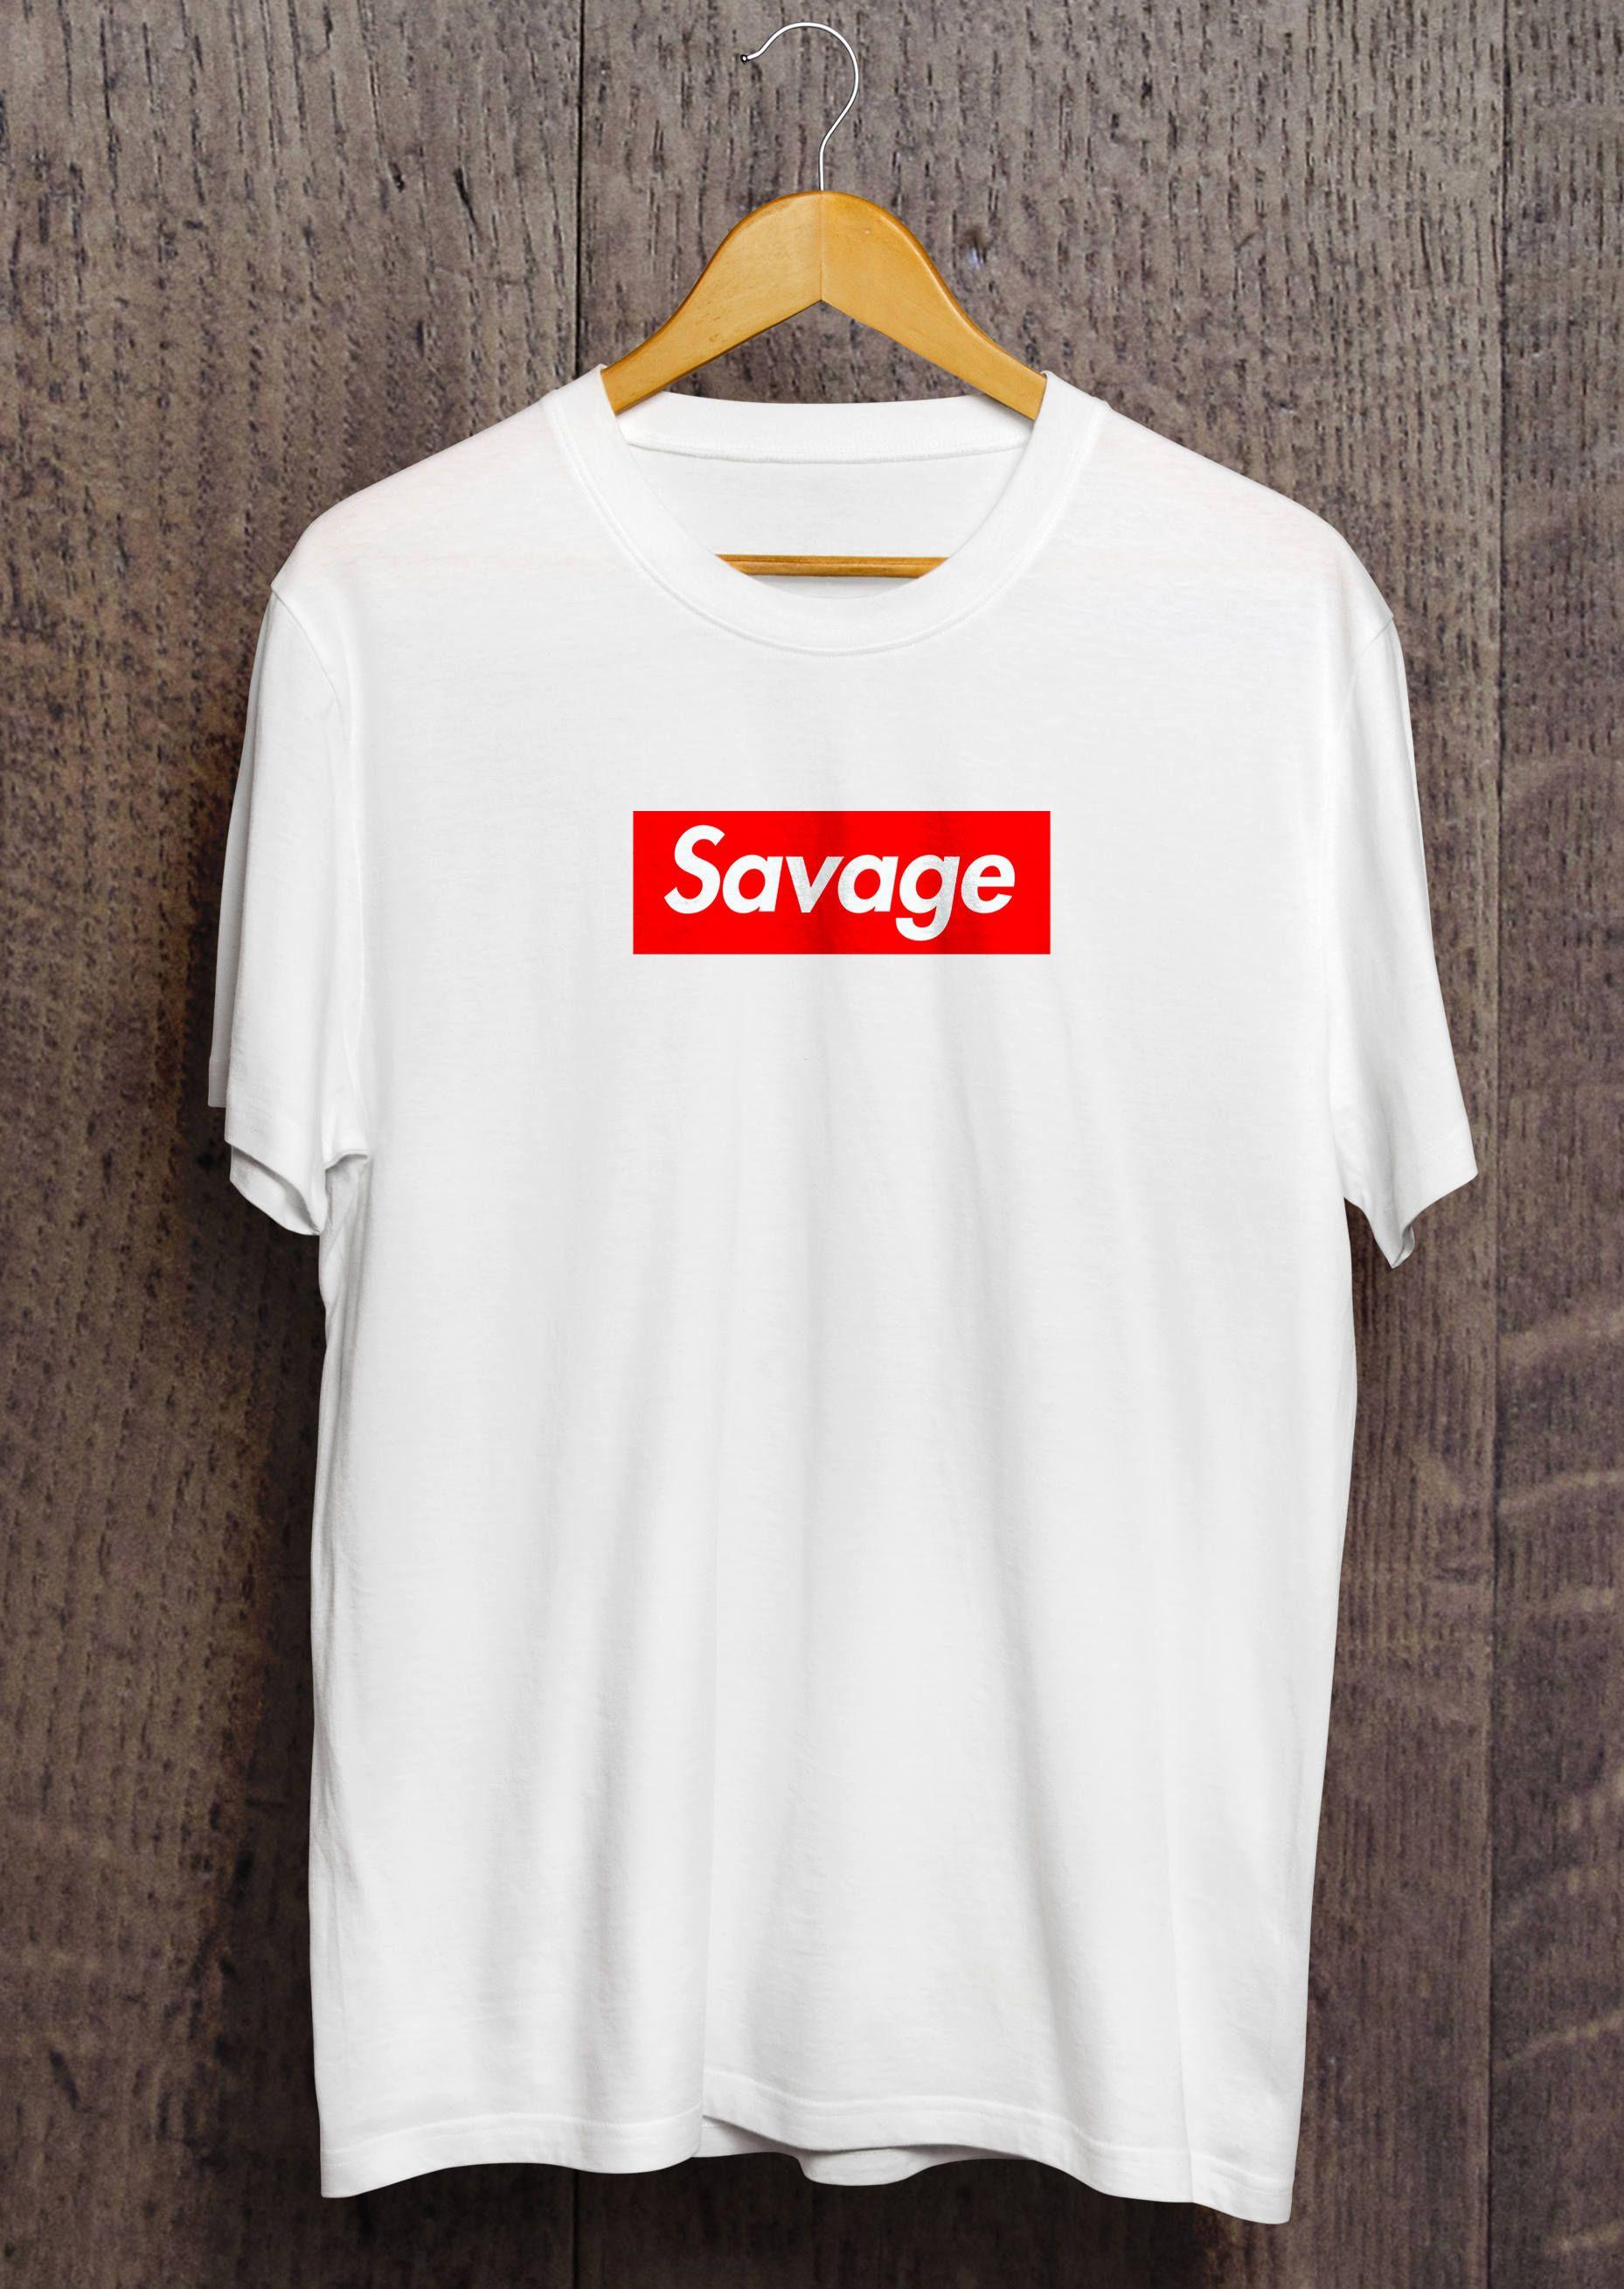 Savage Clothing Logo - Savage Box Logo Shirt 21 Supreme Parody Unisex T Shirt. Cool Vibes